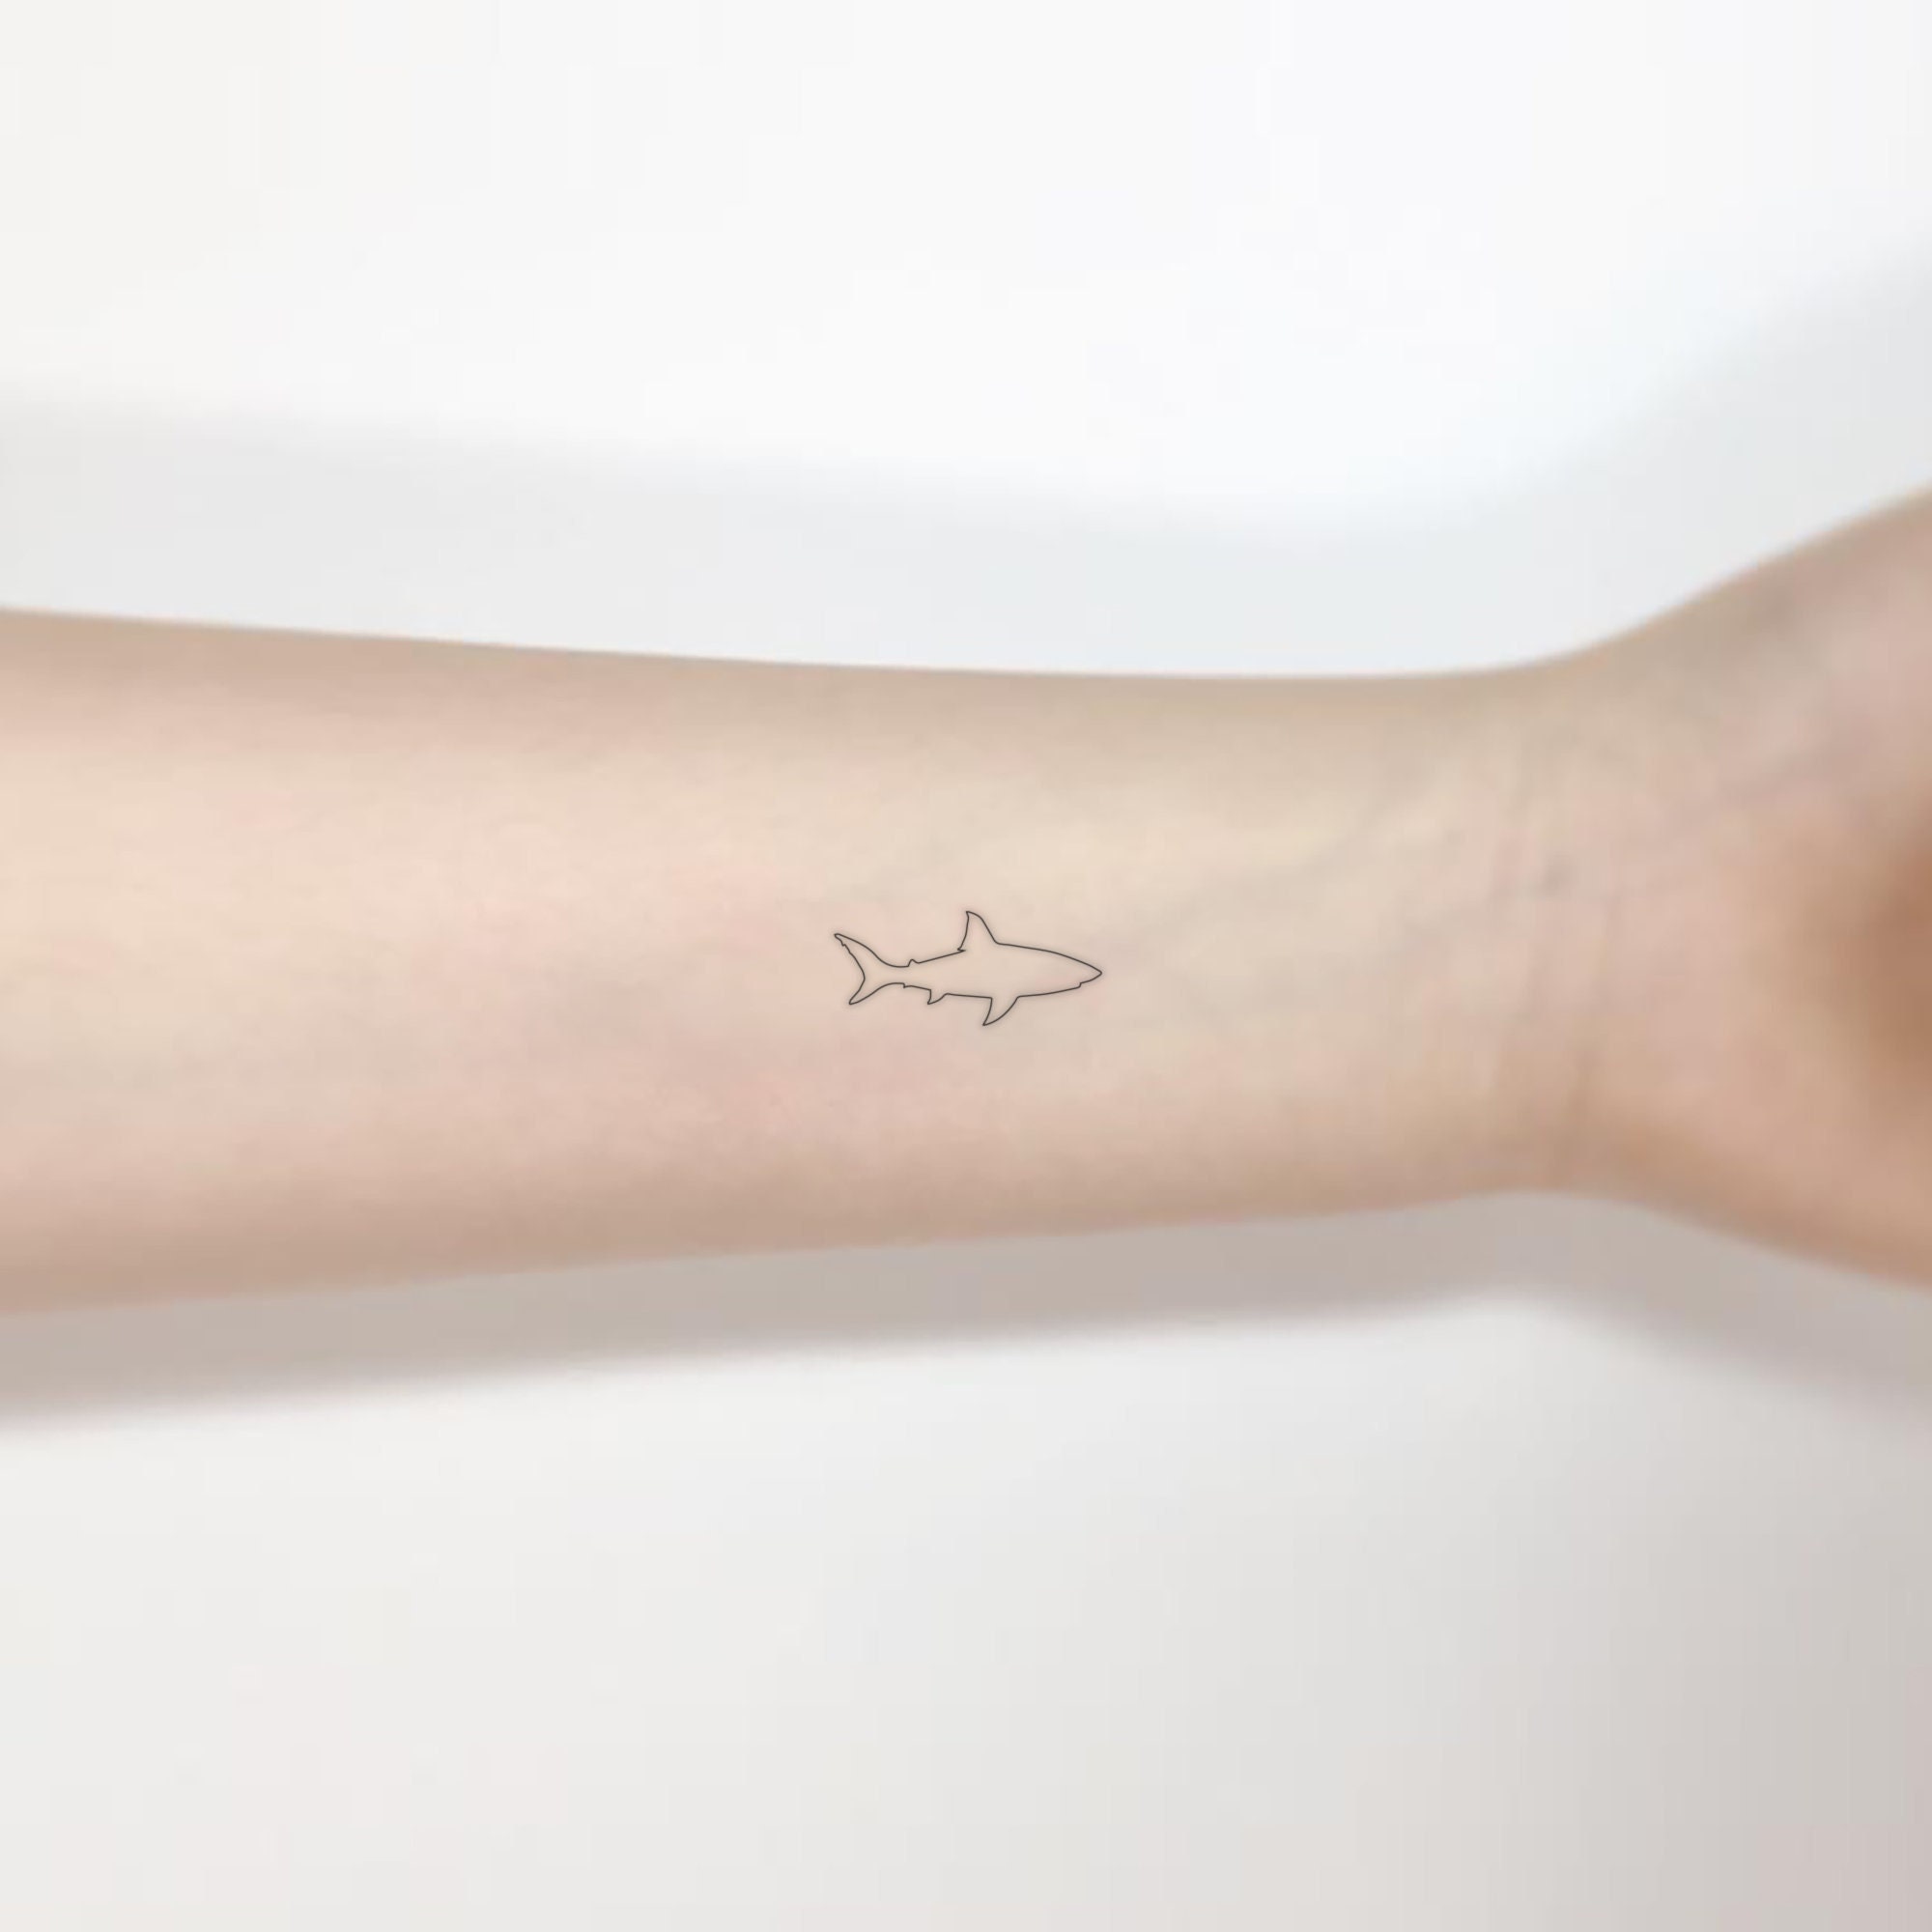 Baby Shark Temporary Tattoo Sticker - OhMyTat